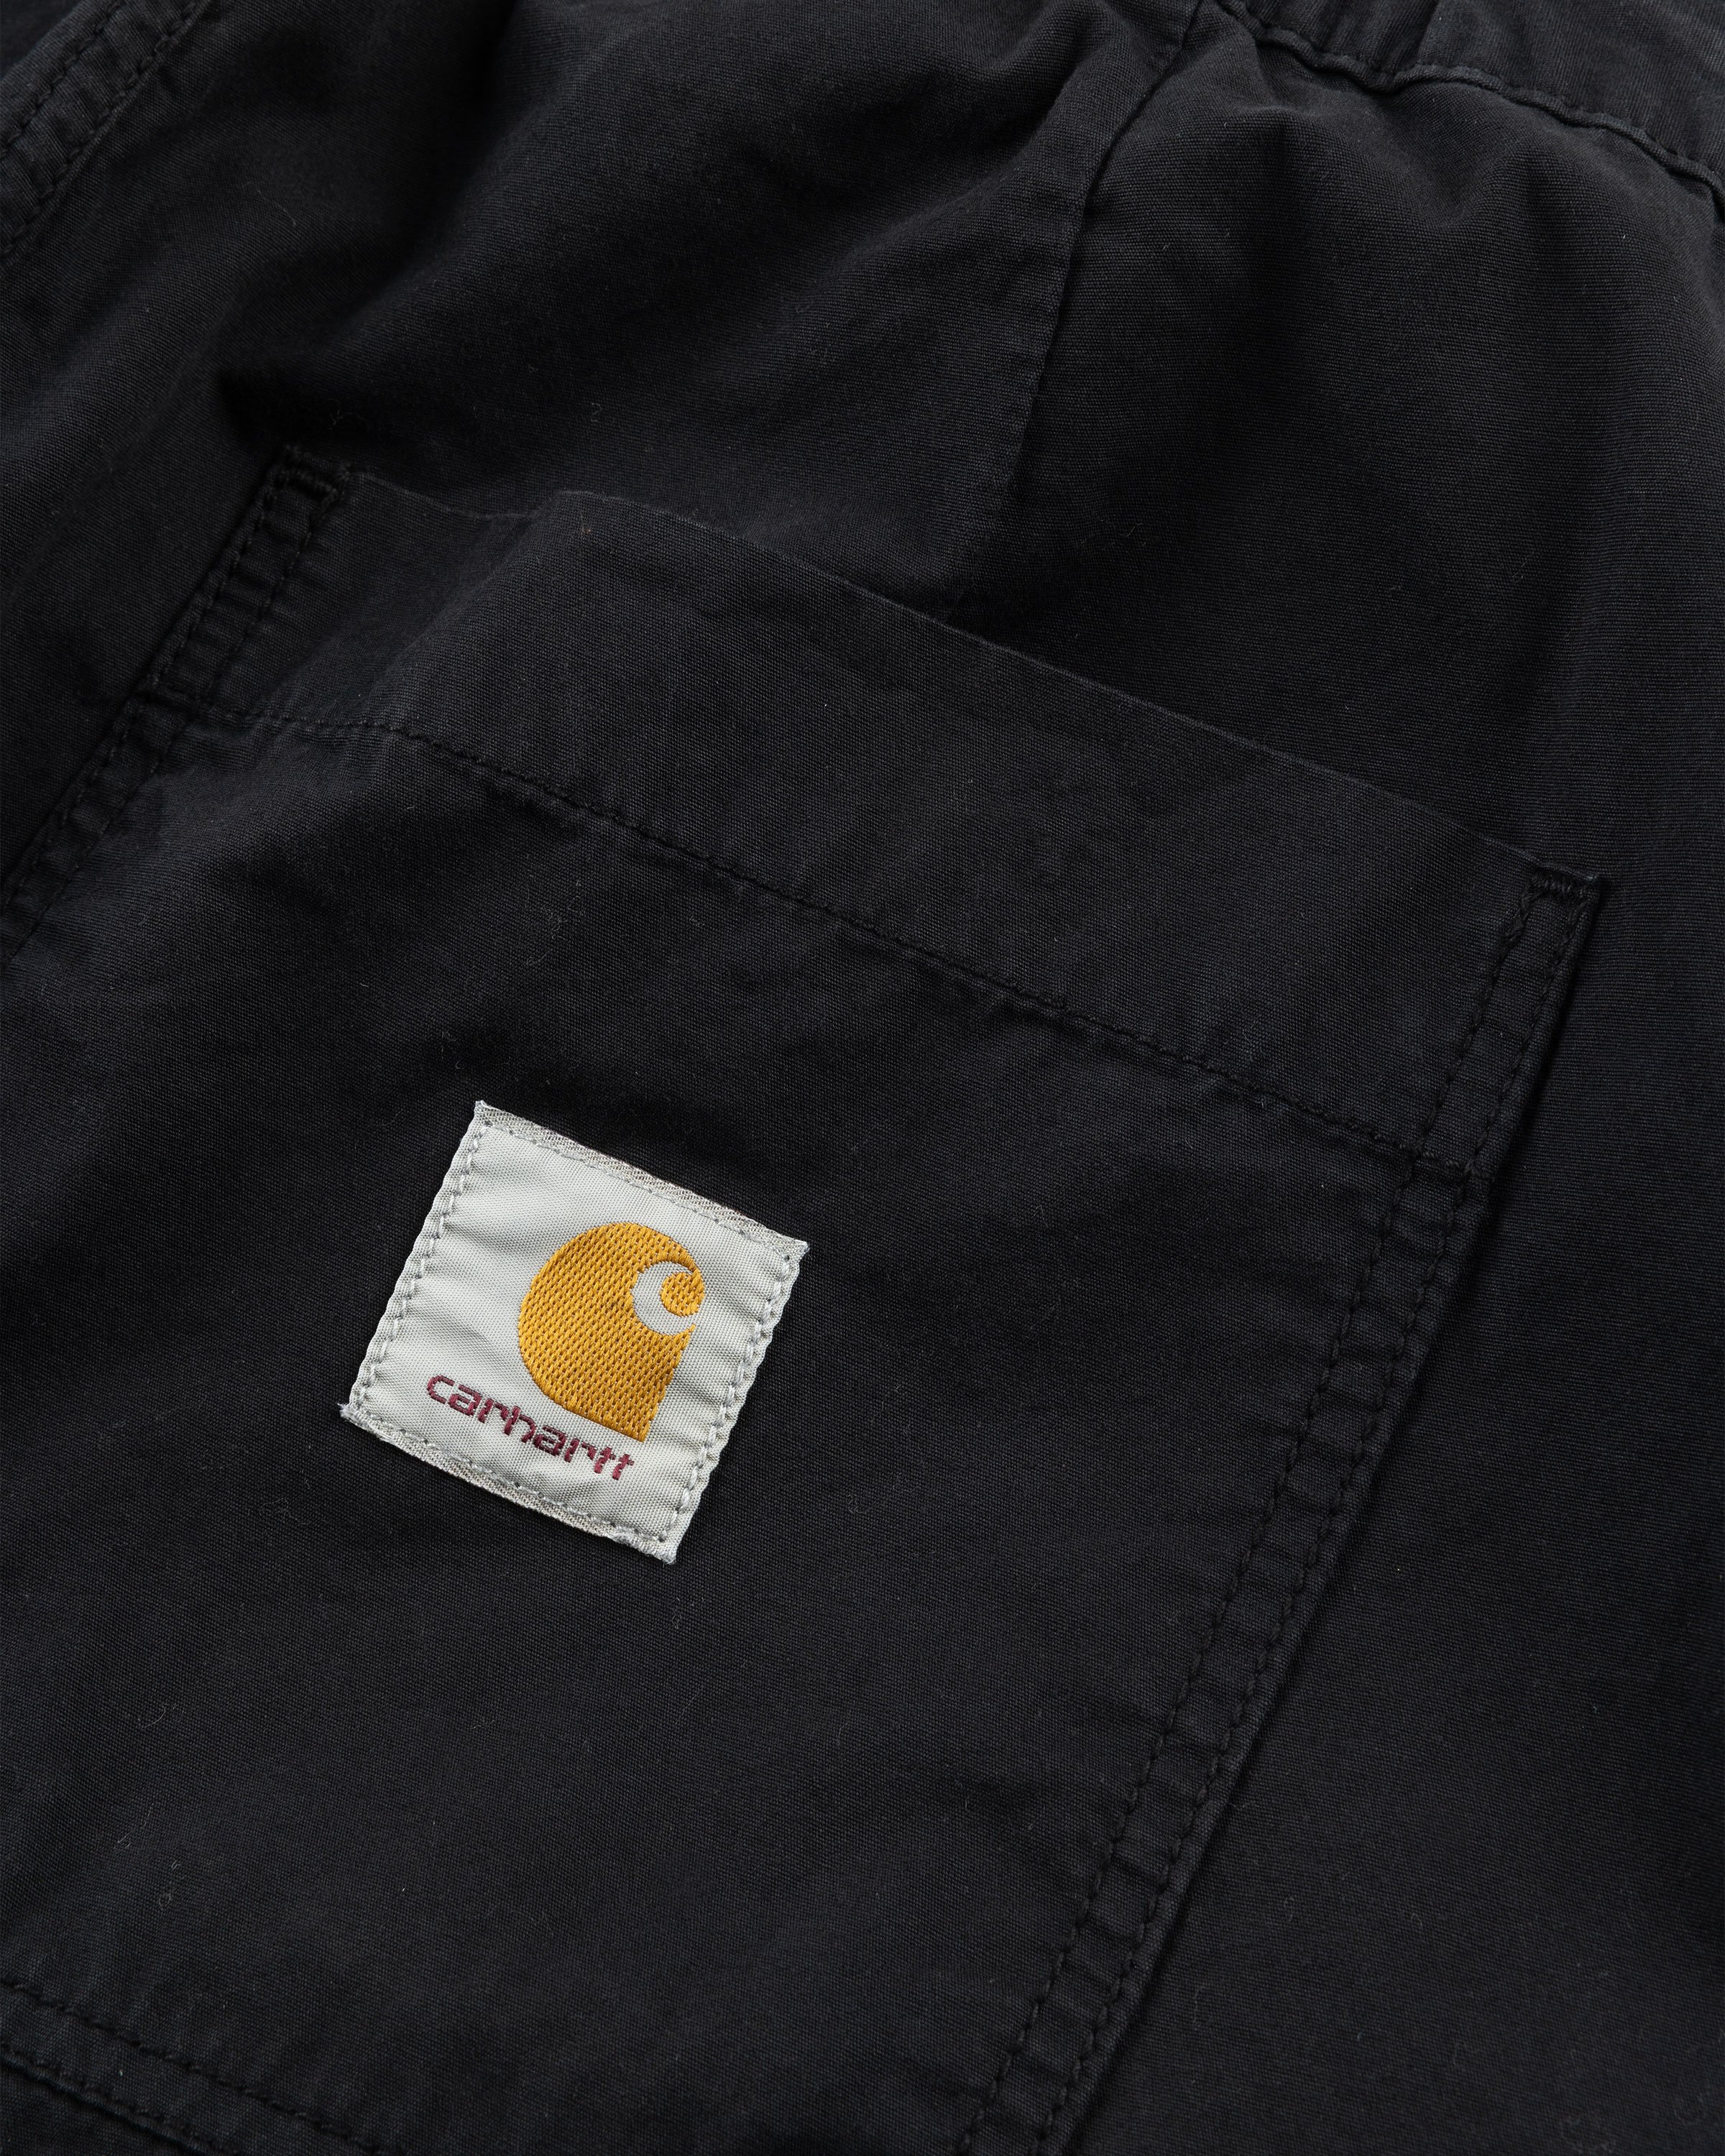 Carhartt WIP - Judd Pant Black /garment dyed - Clothing - Black - Image 6